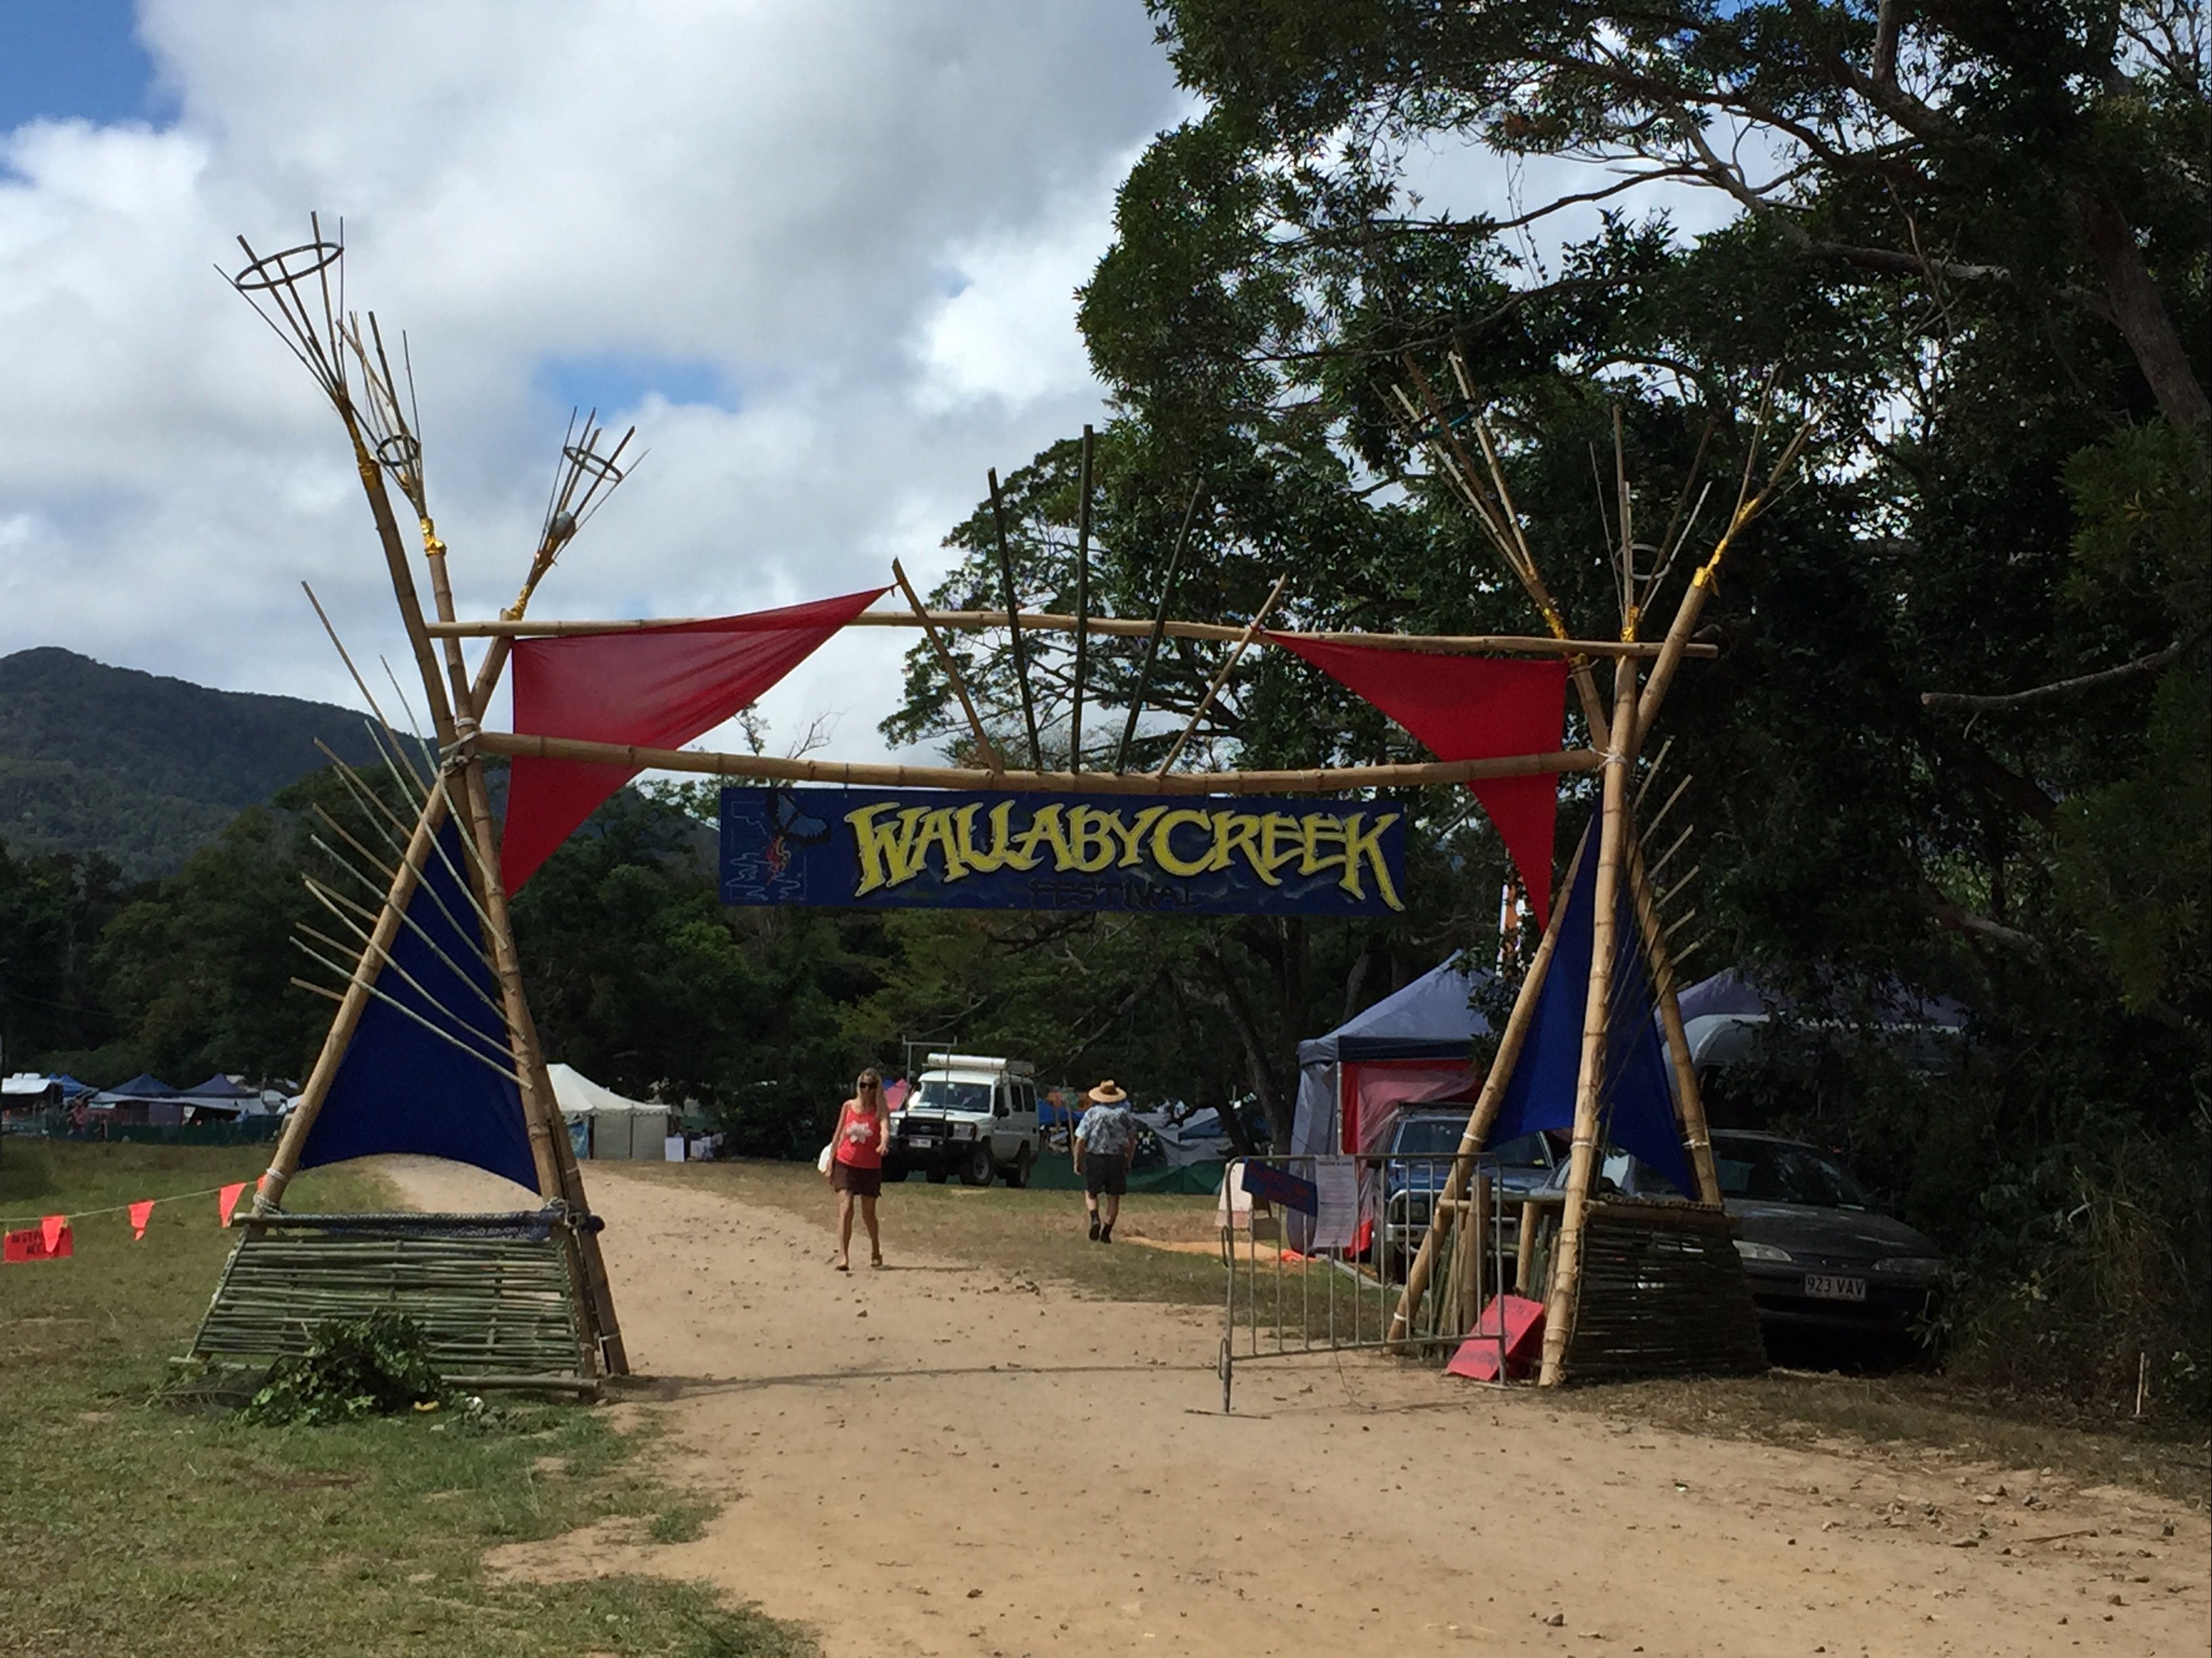 Entrance gates to Wallaby Creek Festival